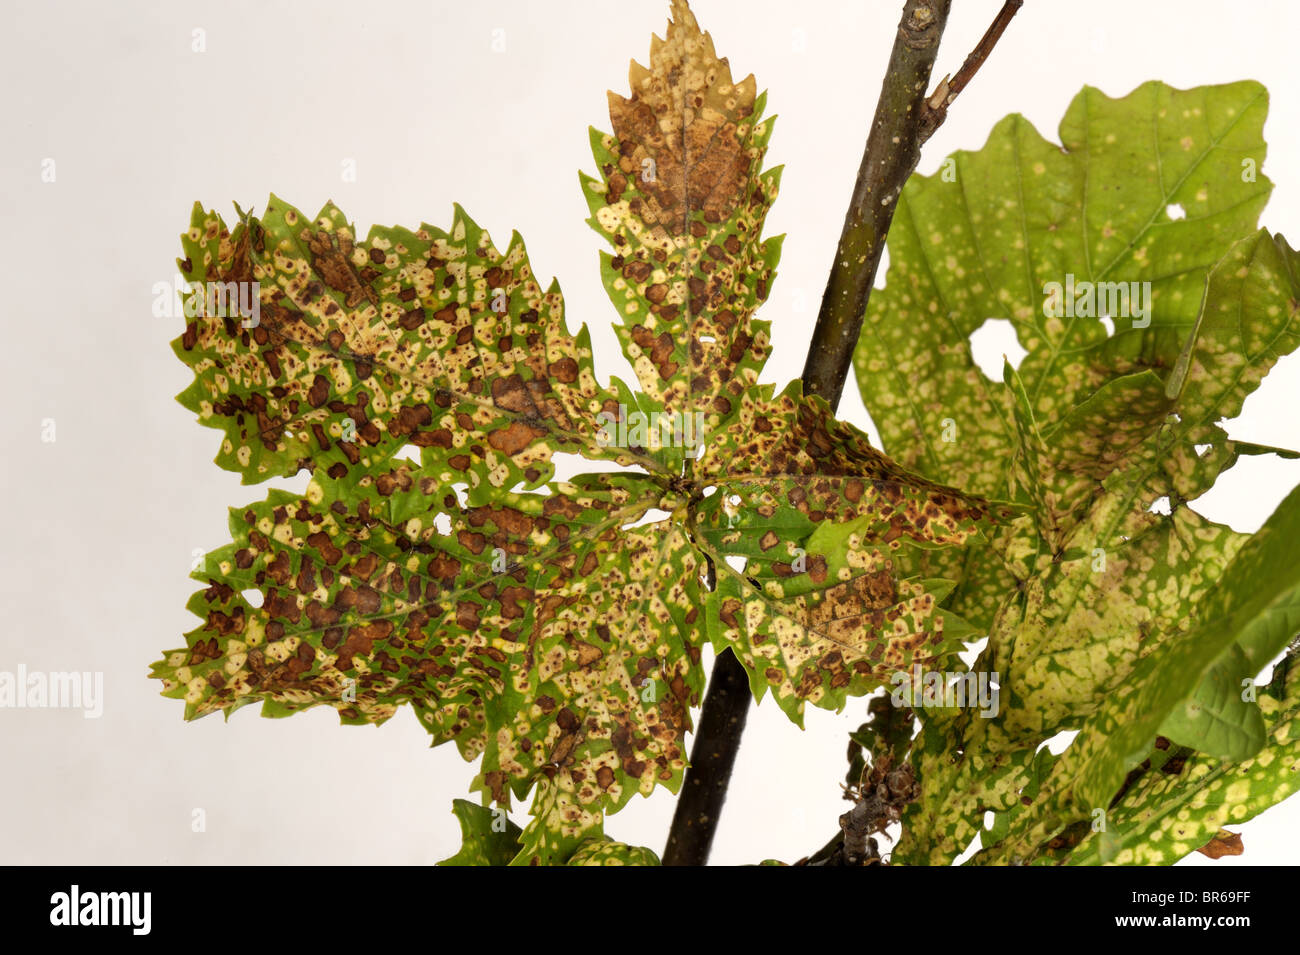 Oak leaf phylloxera (Phylloxera glabra) damage to oak tree leaves Stock Photo